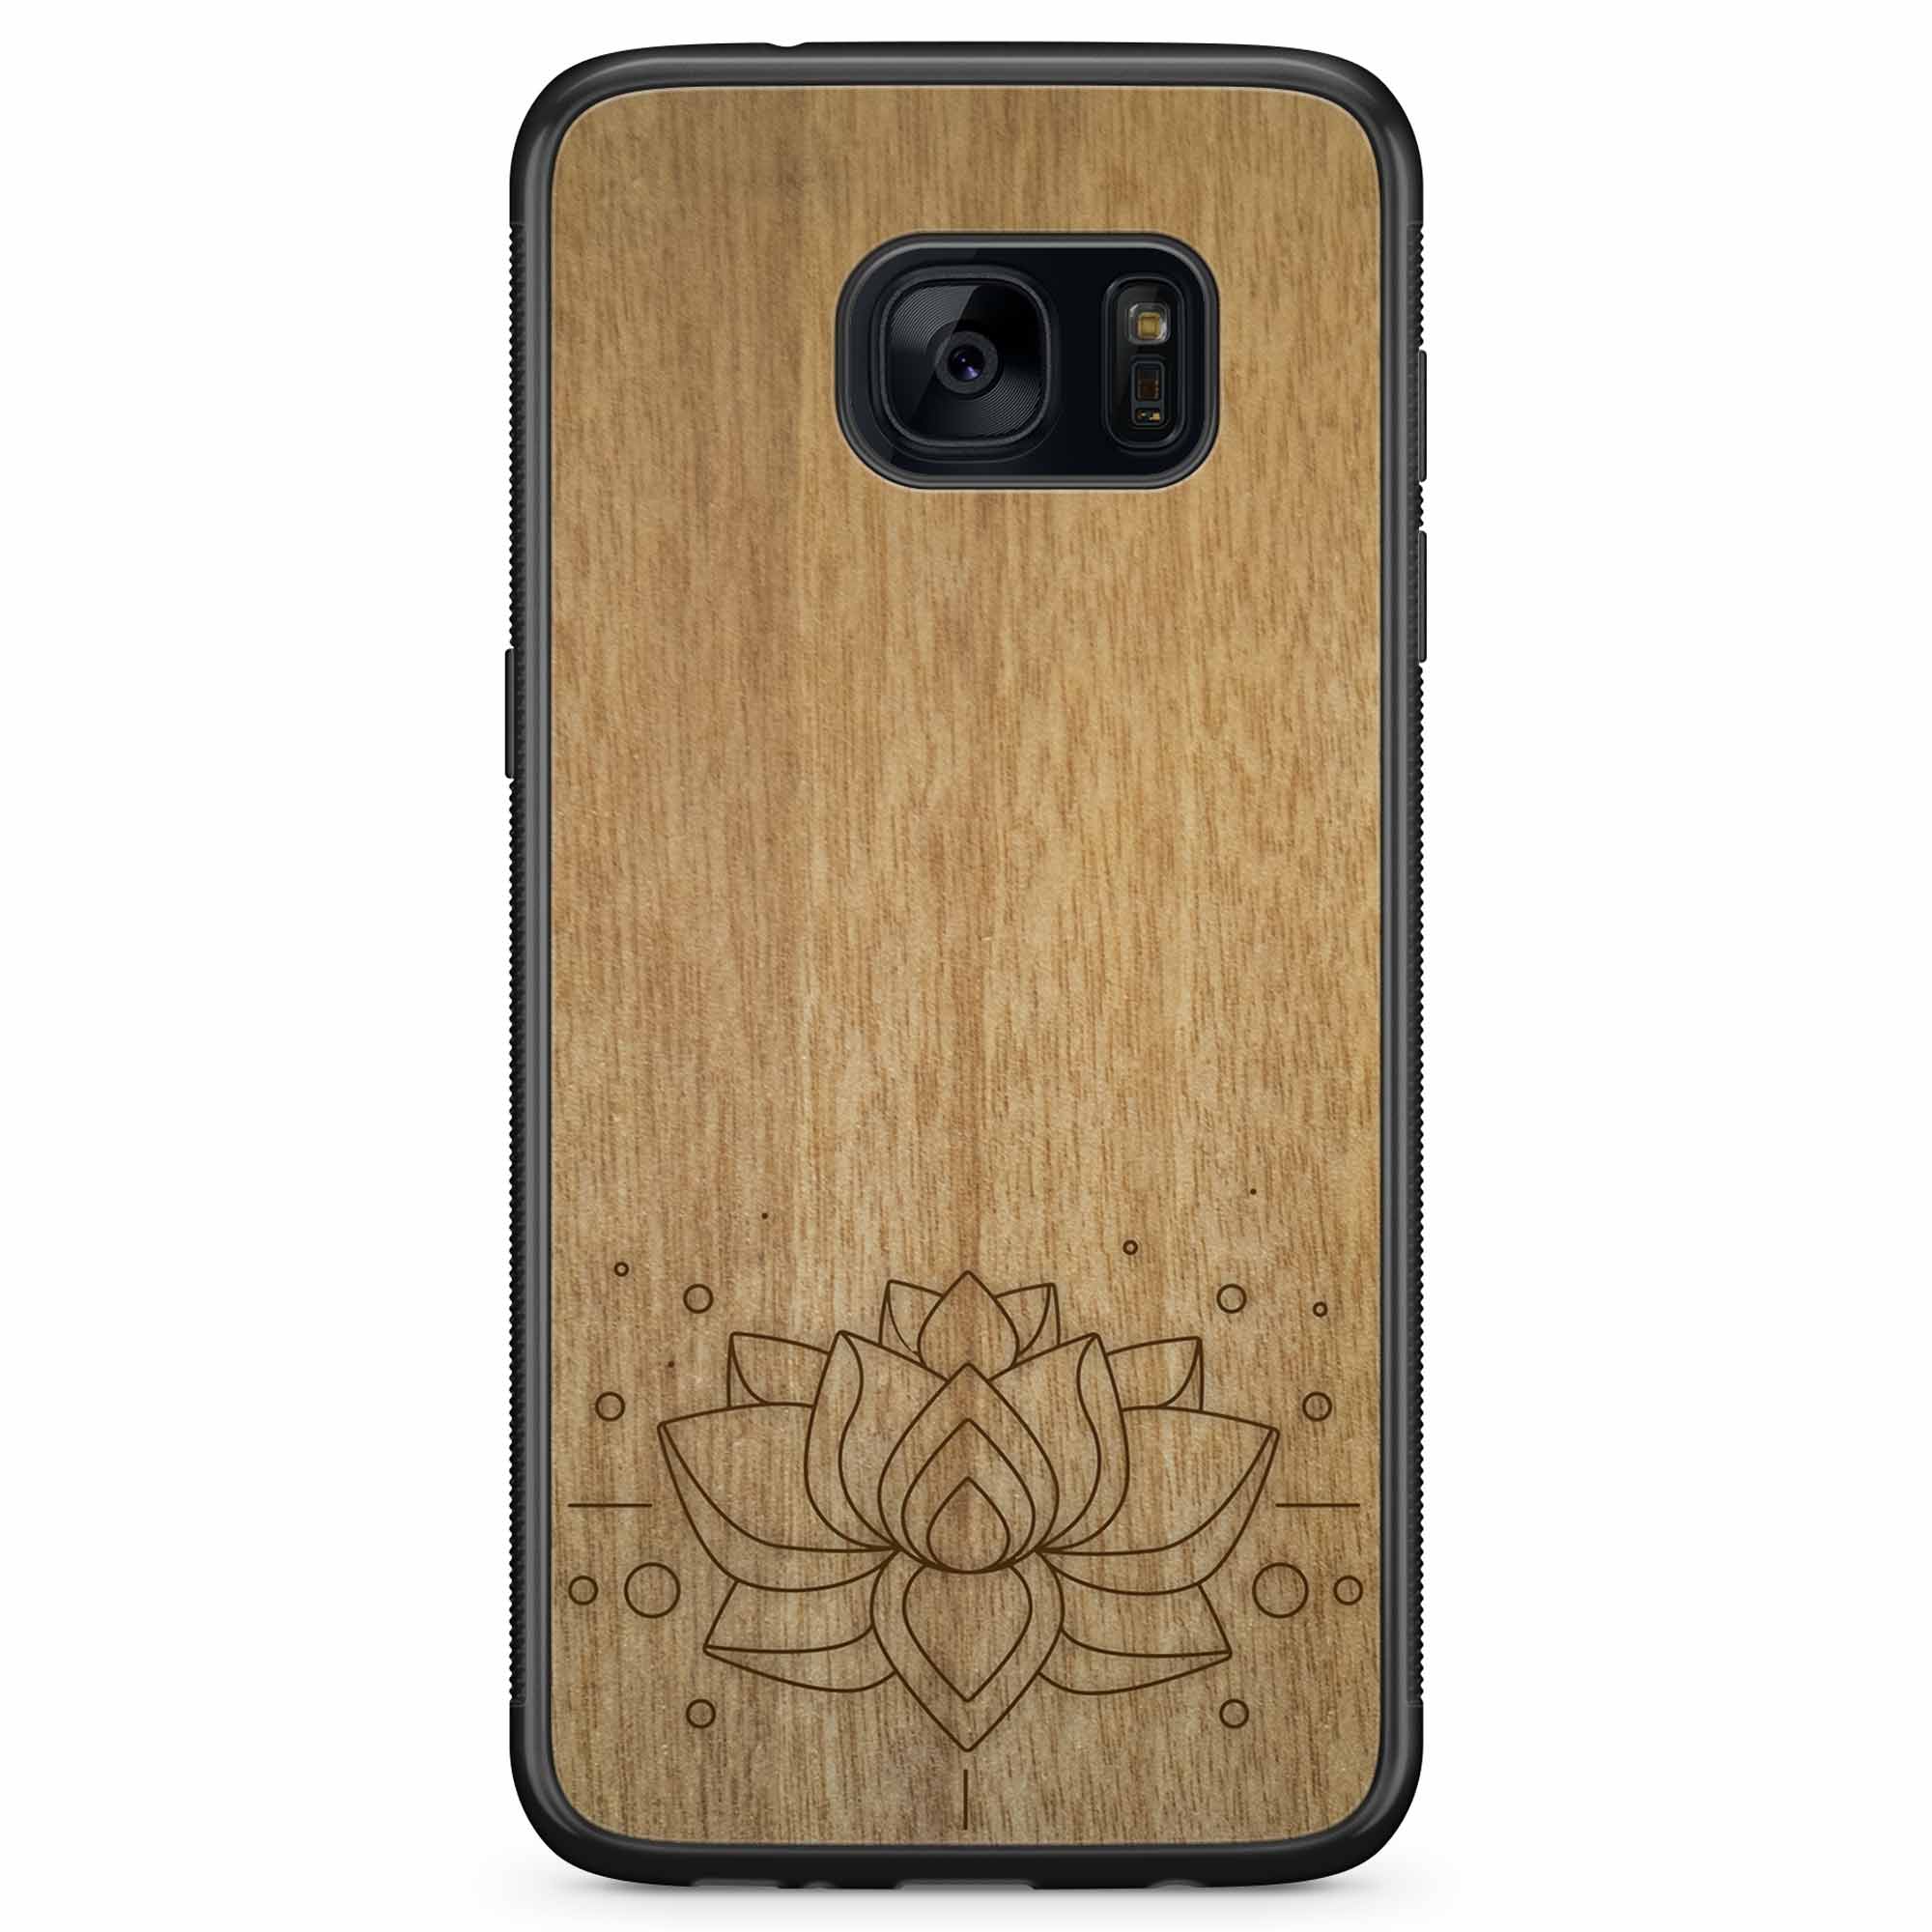 Engraved Lotus Samsung S7 Wood Phone Case